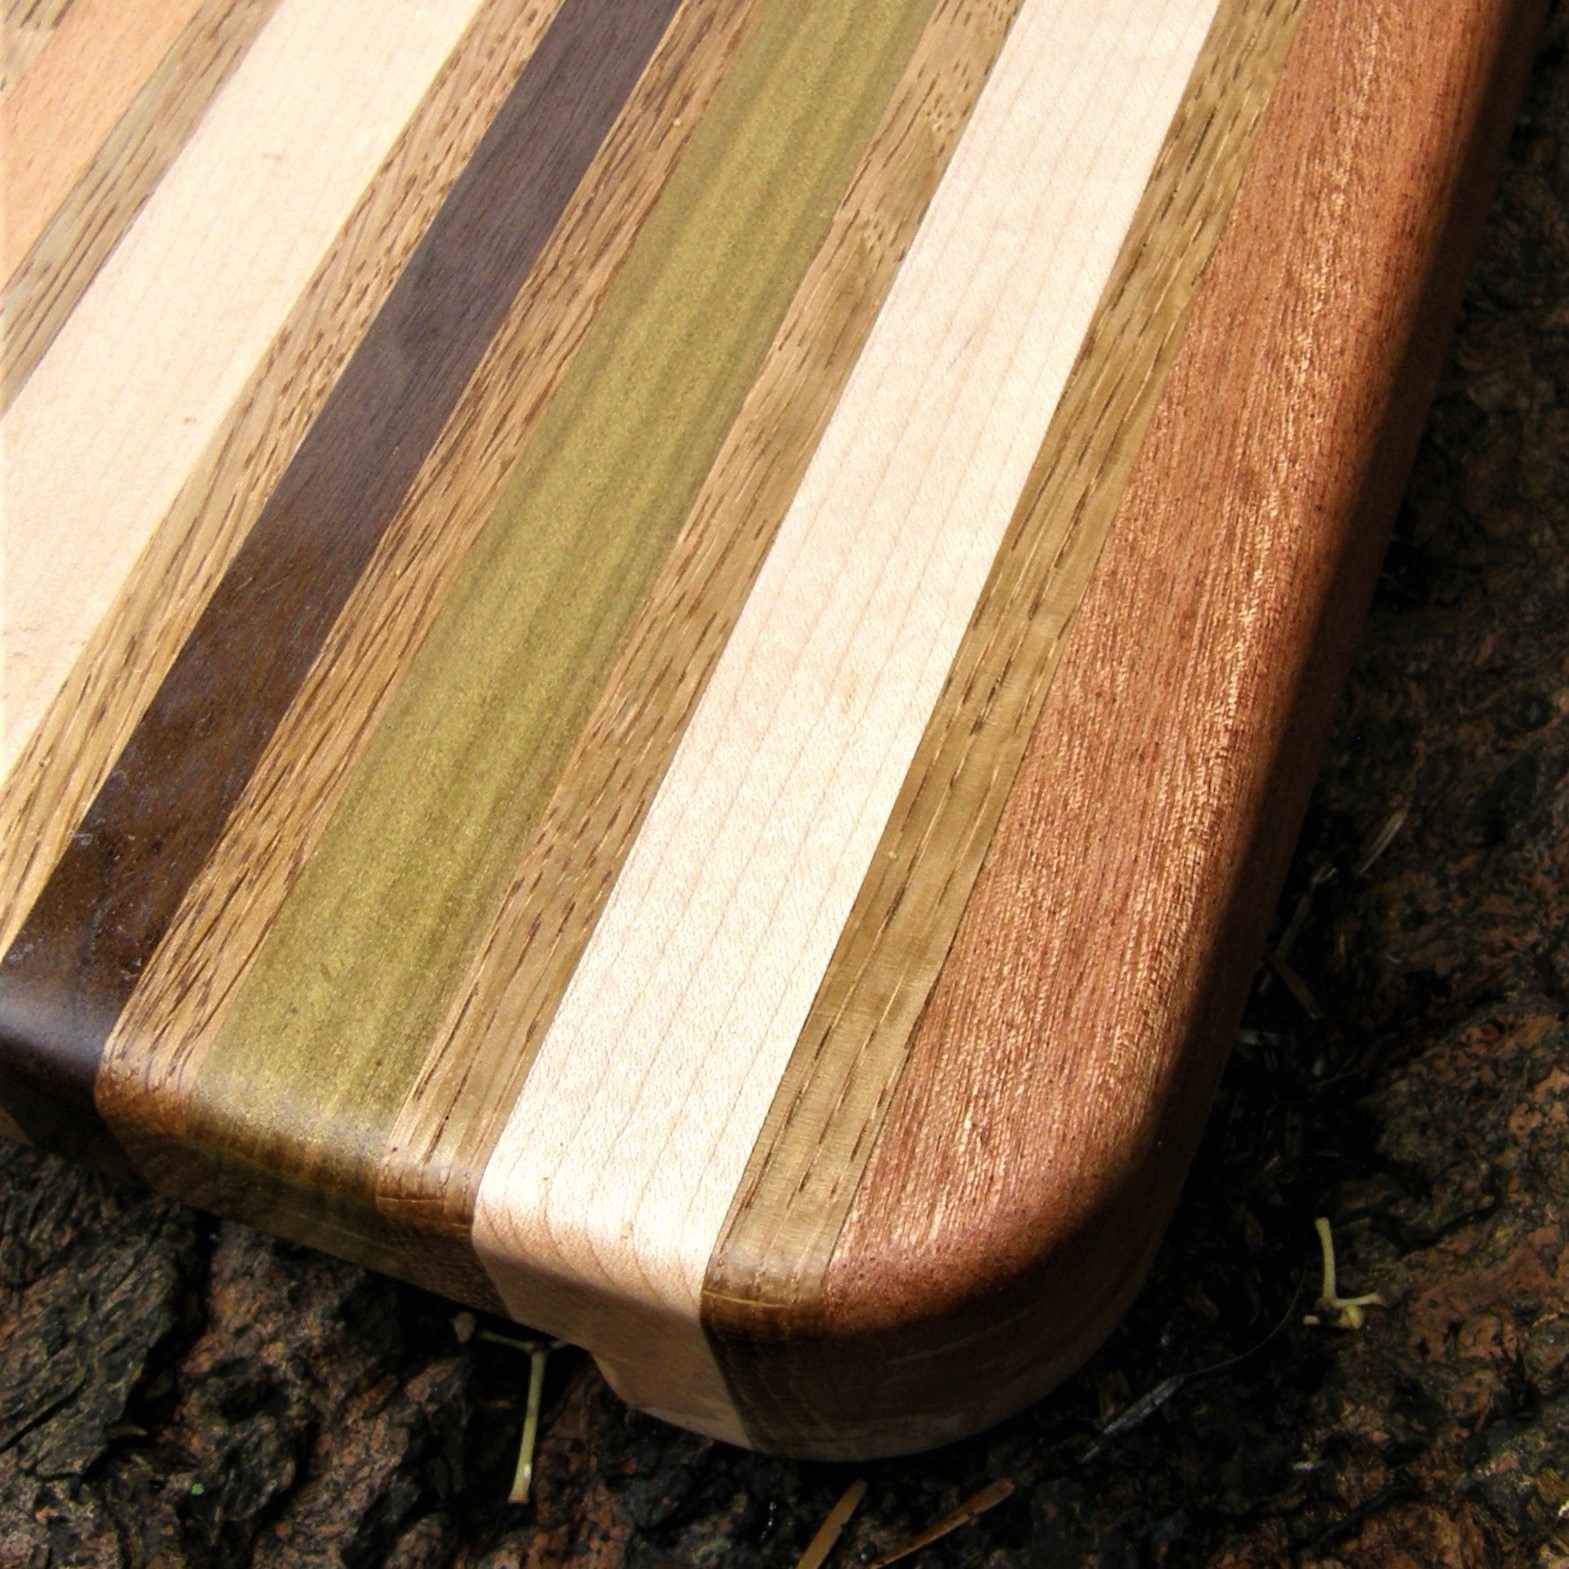 Curracloe Individually Handmade Chopping Board by Grant Designs.